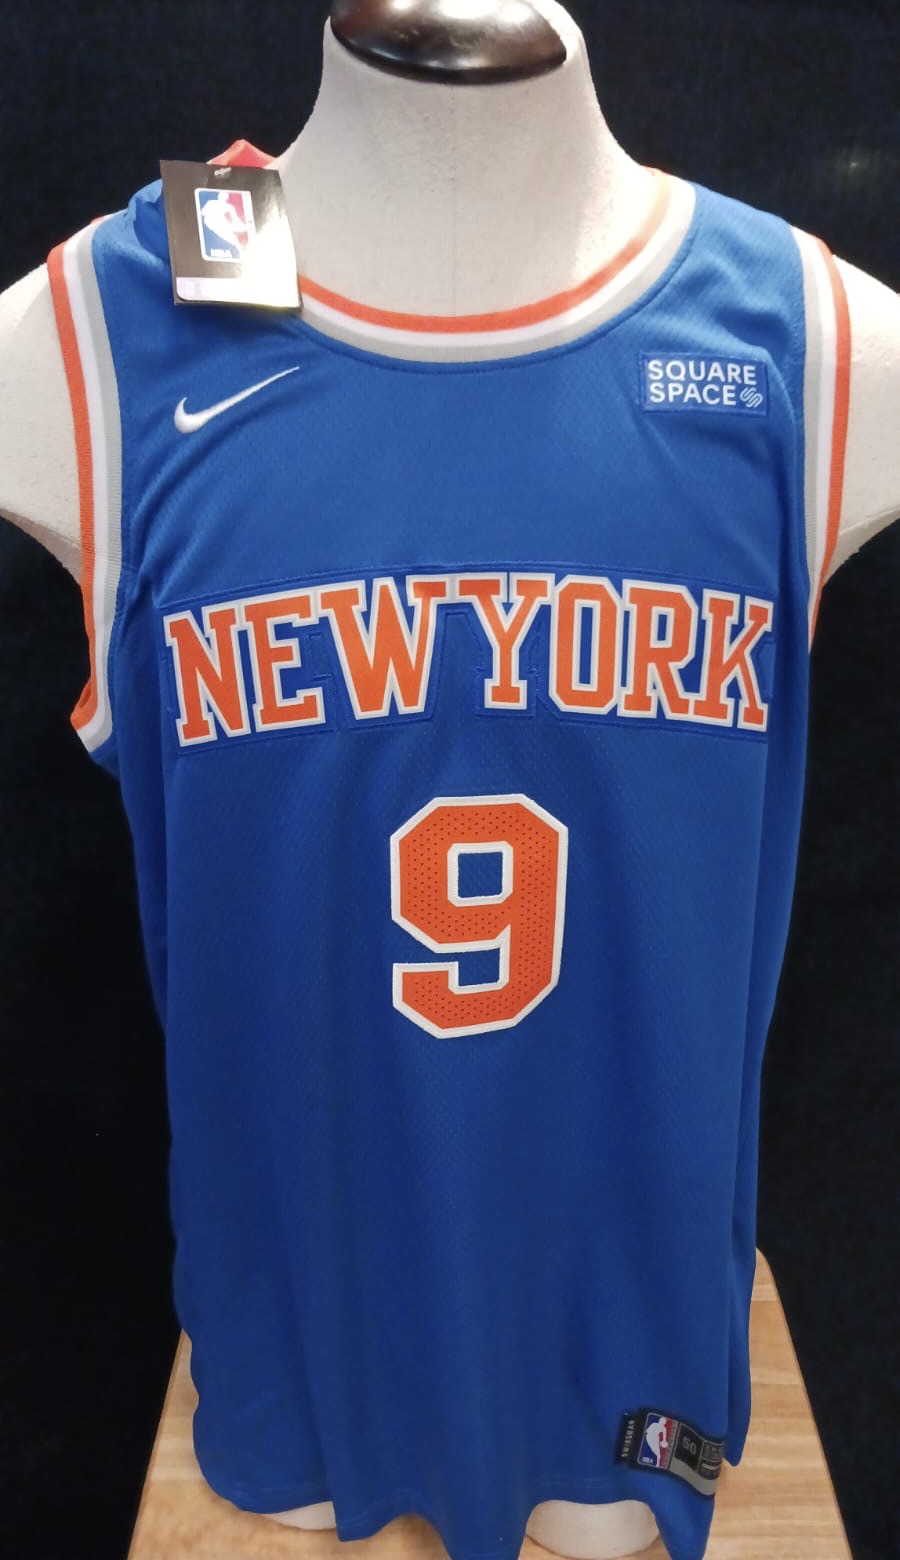 New York Knicks Jersey (City Edition) - RJ Barrett for Sale in